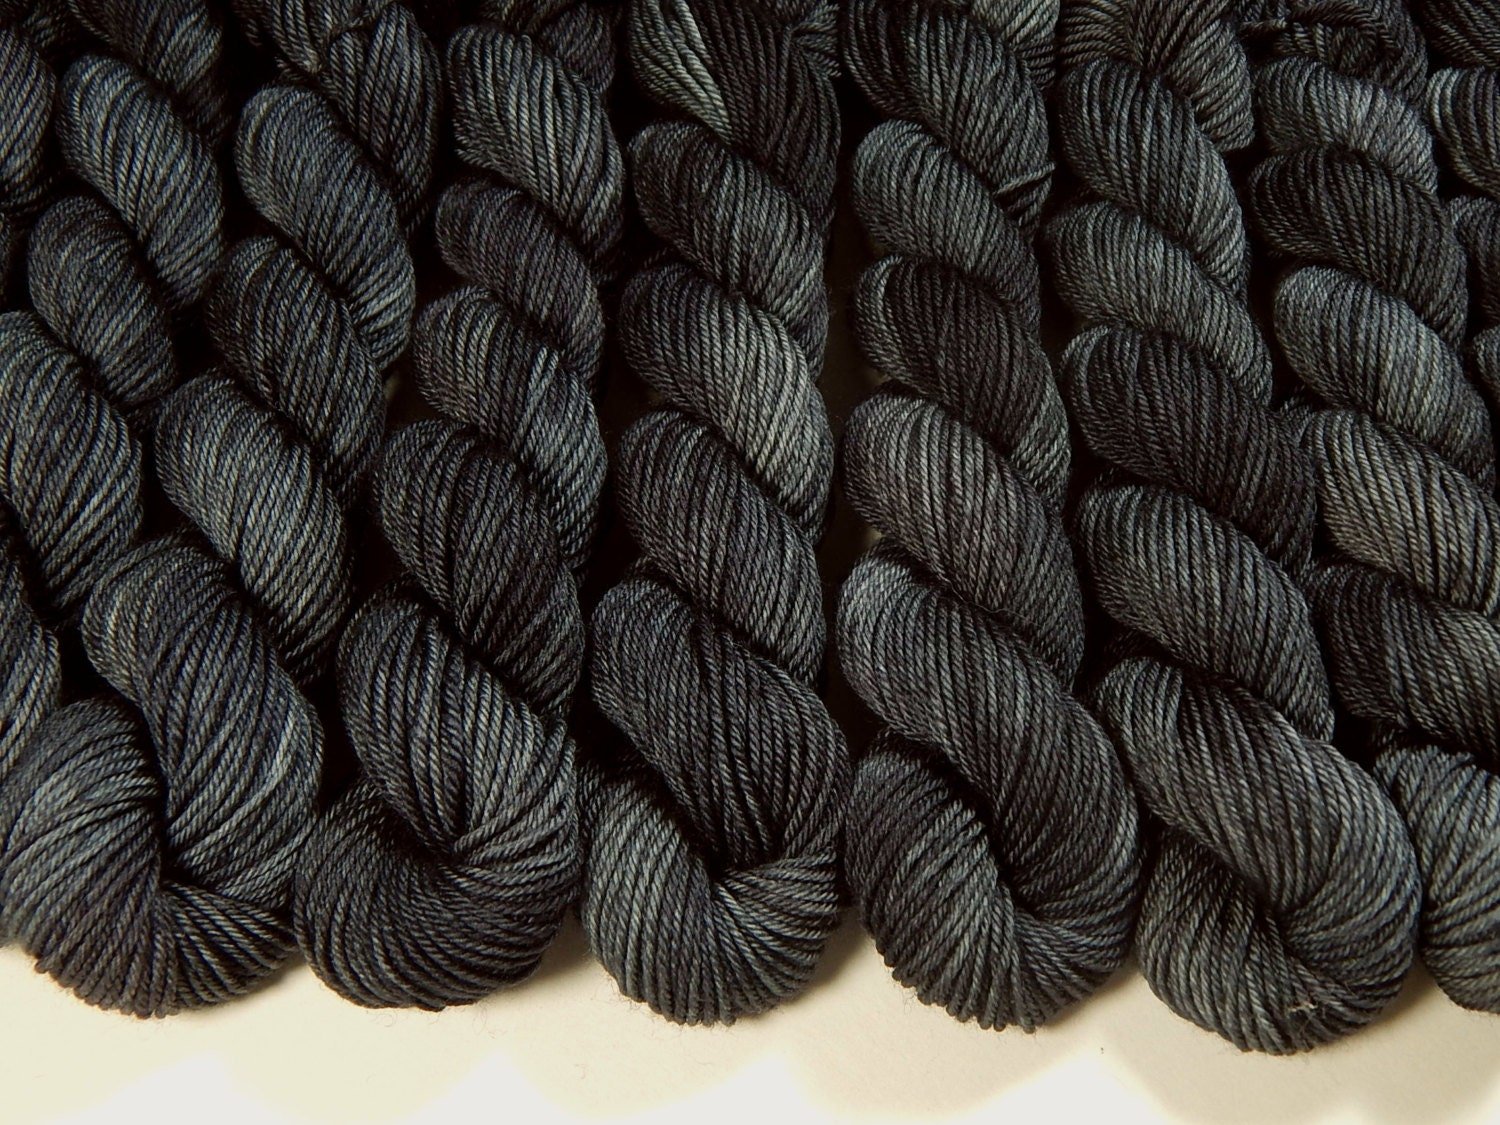 Fingering Weight Mini Skeins Hand Dyed Yarn, 4 Ply Superwash Merino Wool - Slate Grey Tonal - Indie Dyed Charcoal Gray Sock Knitting Yarn